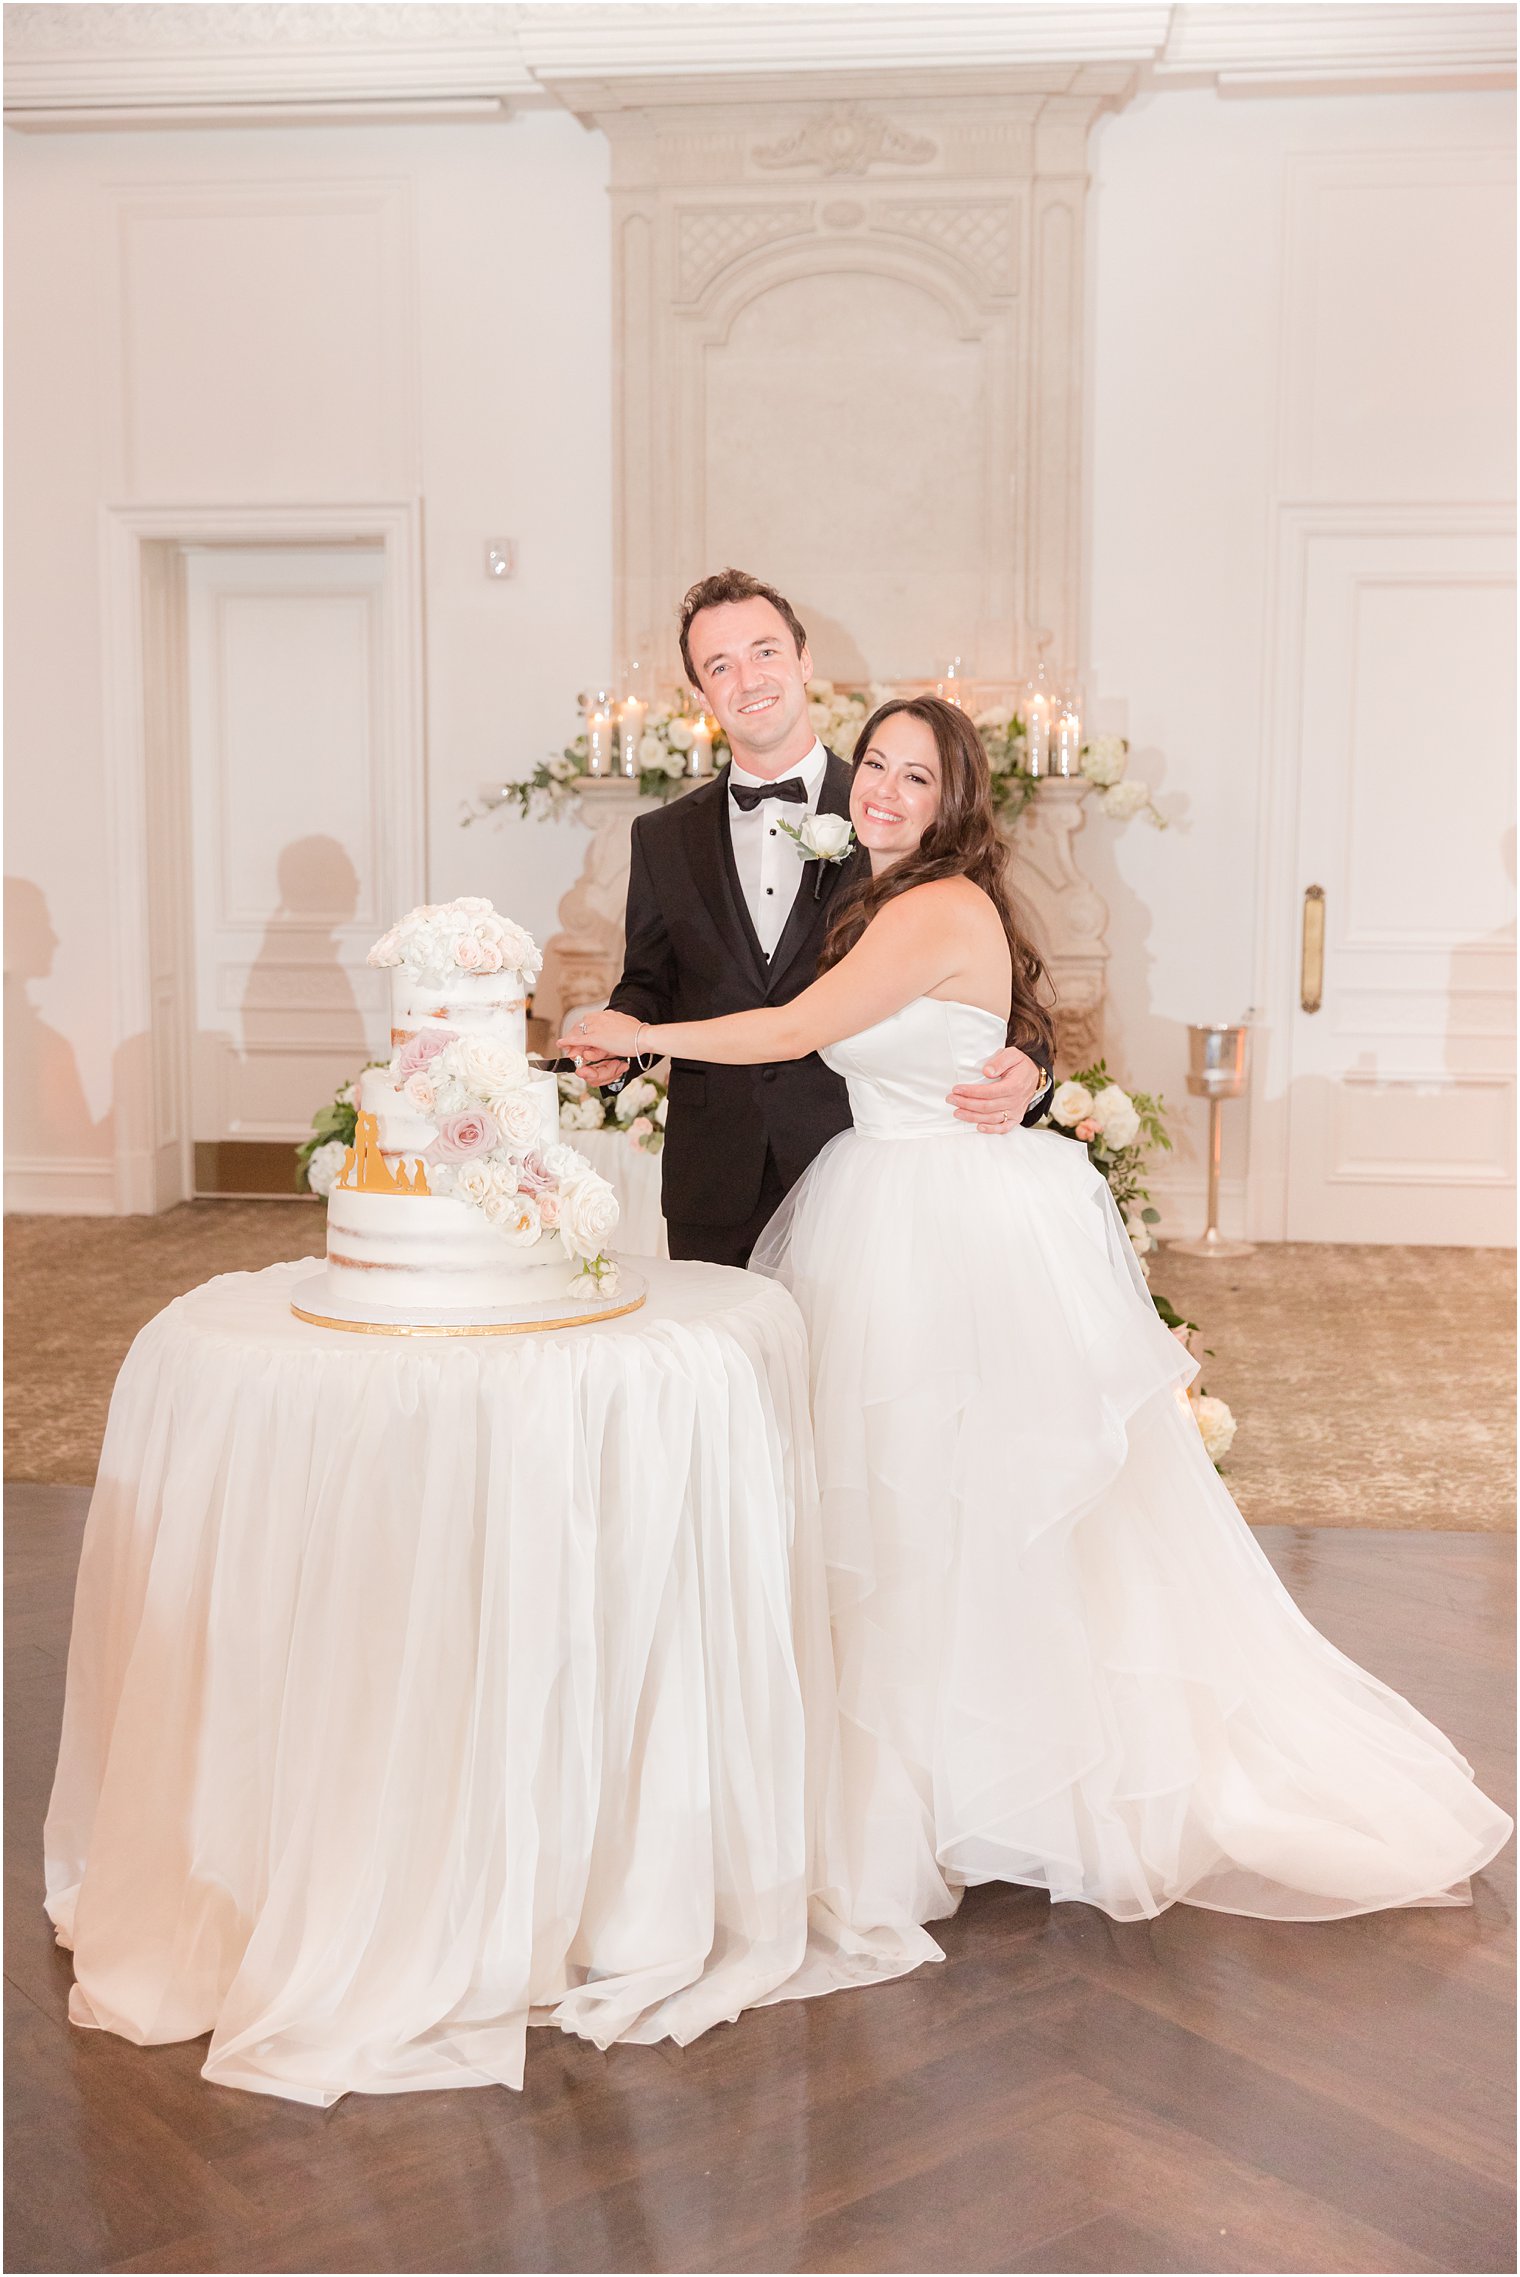 newlyweds hug by wedding cake at Park Chateau Estate